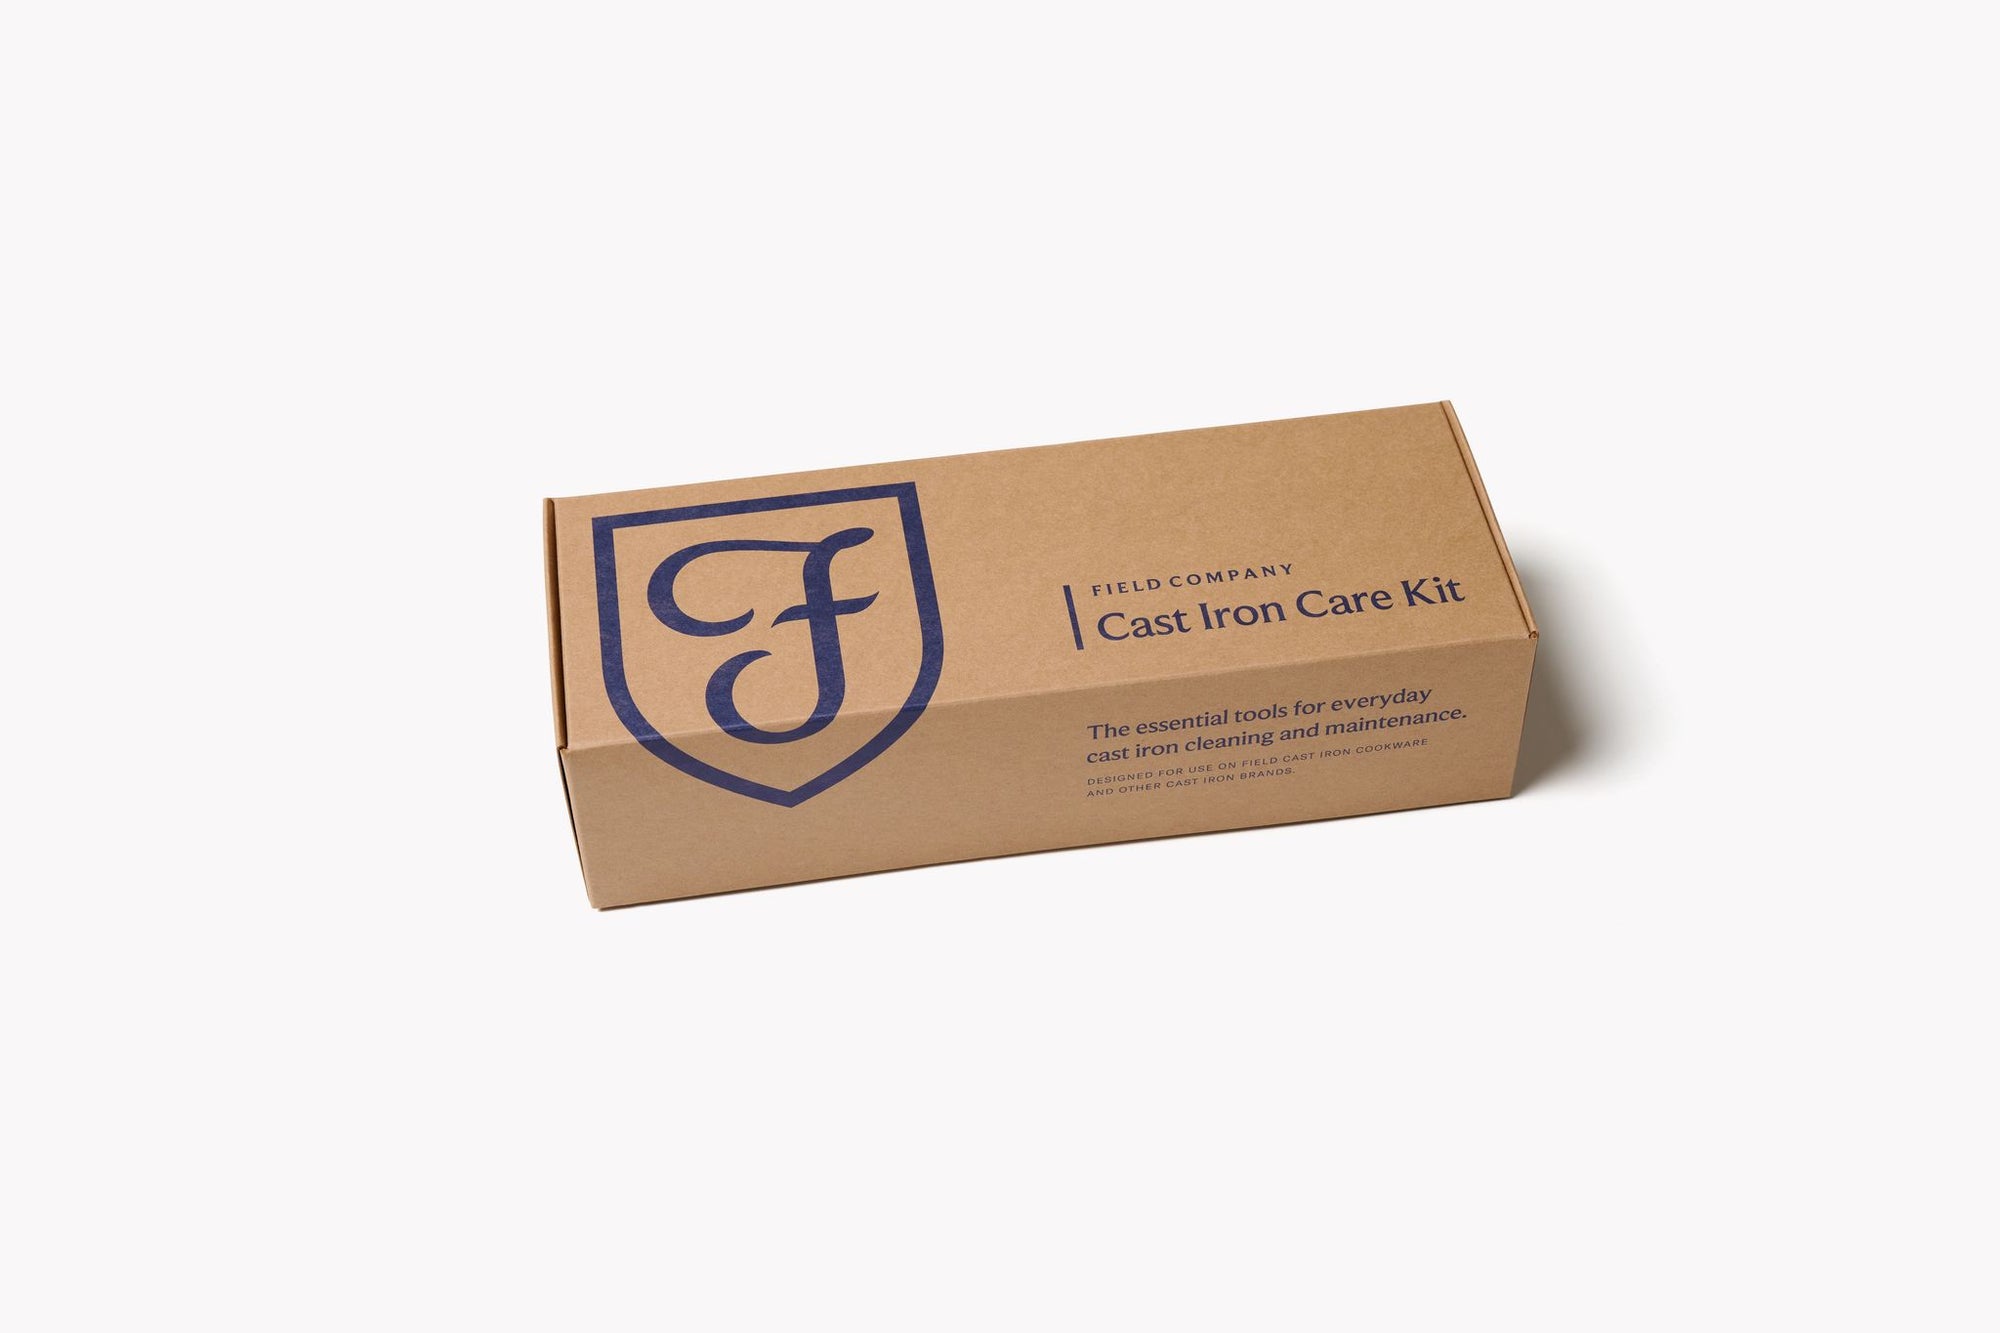 Field Company Cast Iron Skillet Care Kit – Premium Home Source